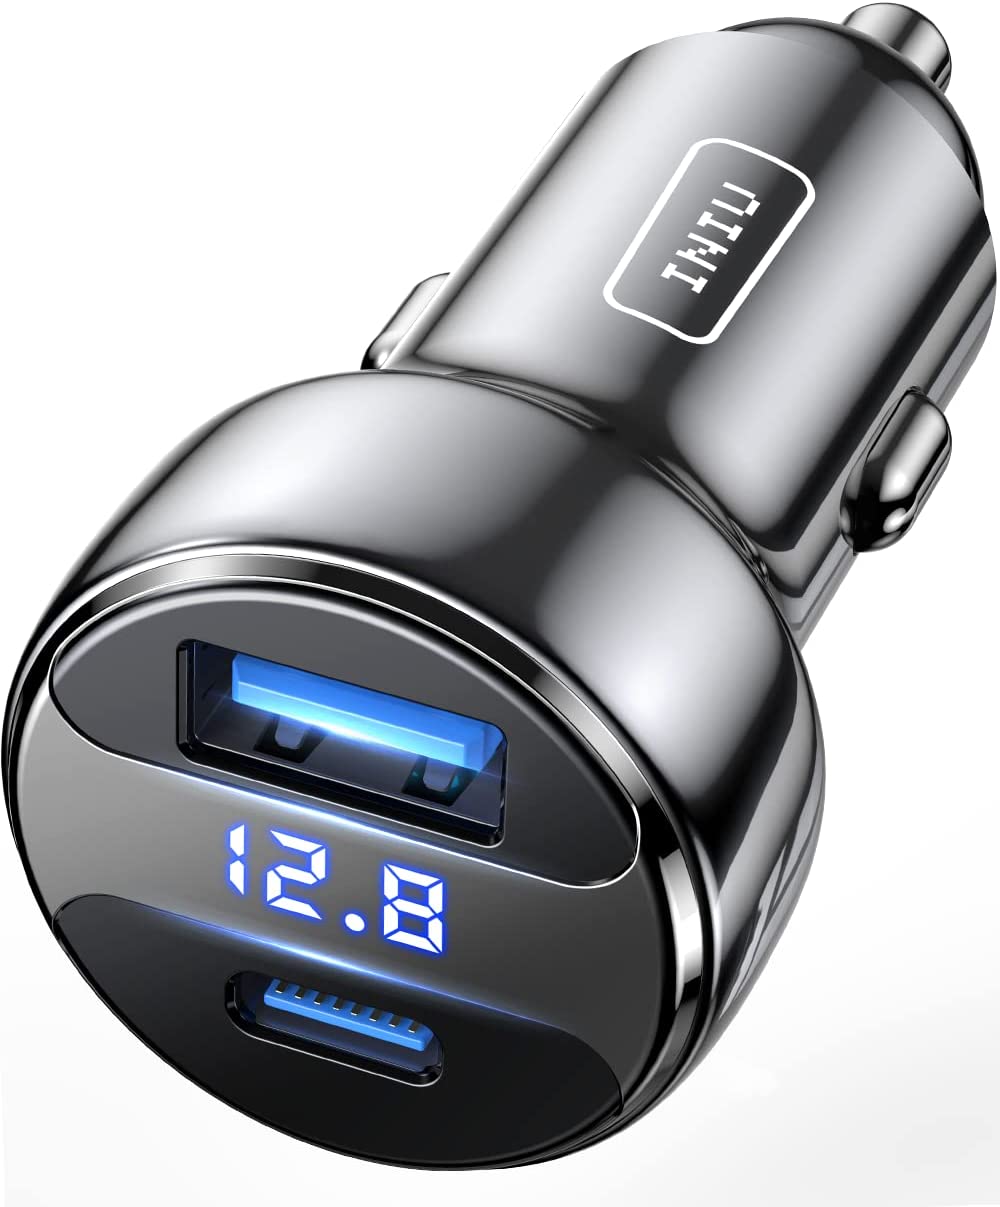 66W 4 Ports USB Auto Telefon Ladegerät Schnellladegerät Adapter Für IPhone  Für Handy Ladegerät Adapter Im Auto